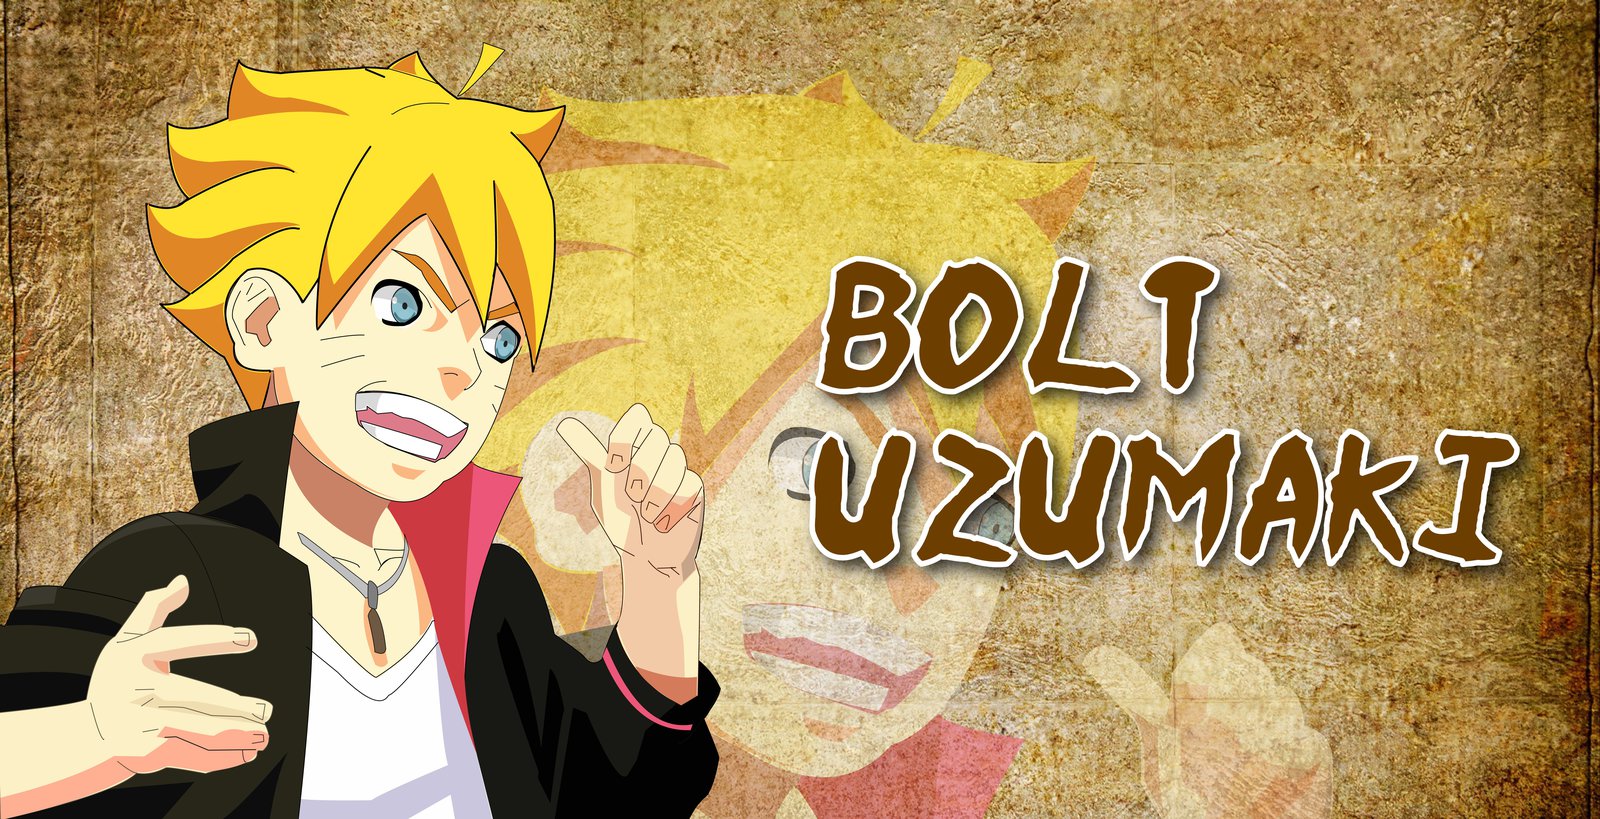 Uzumaki Bolt/Boruto From Naruto. by Blazearx on DeviantArt